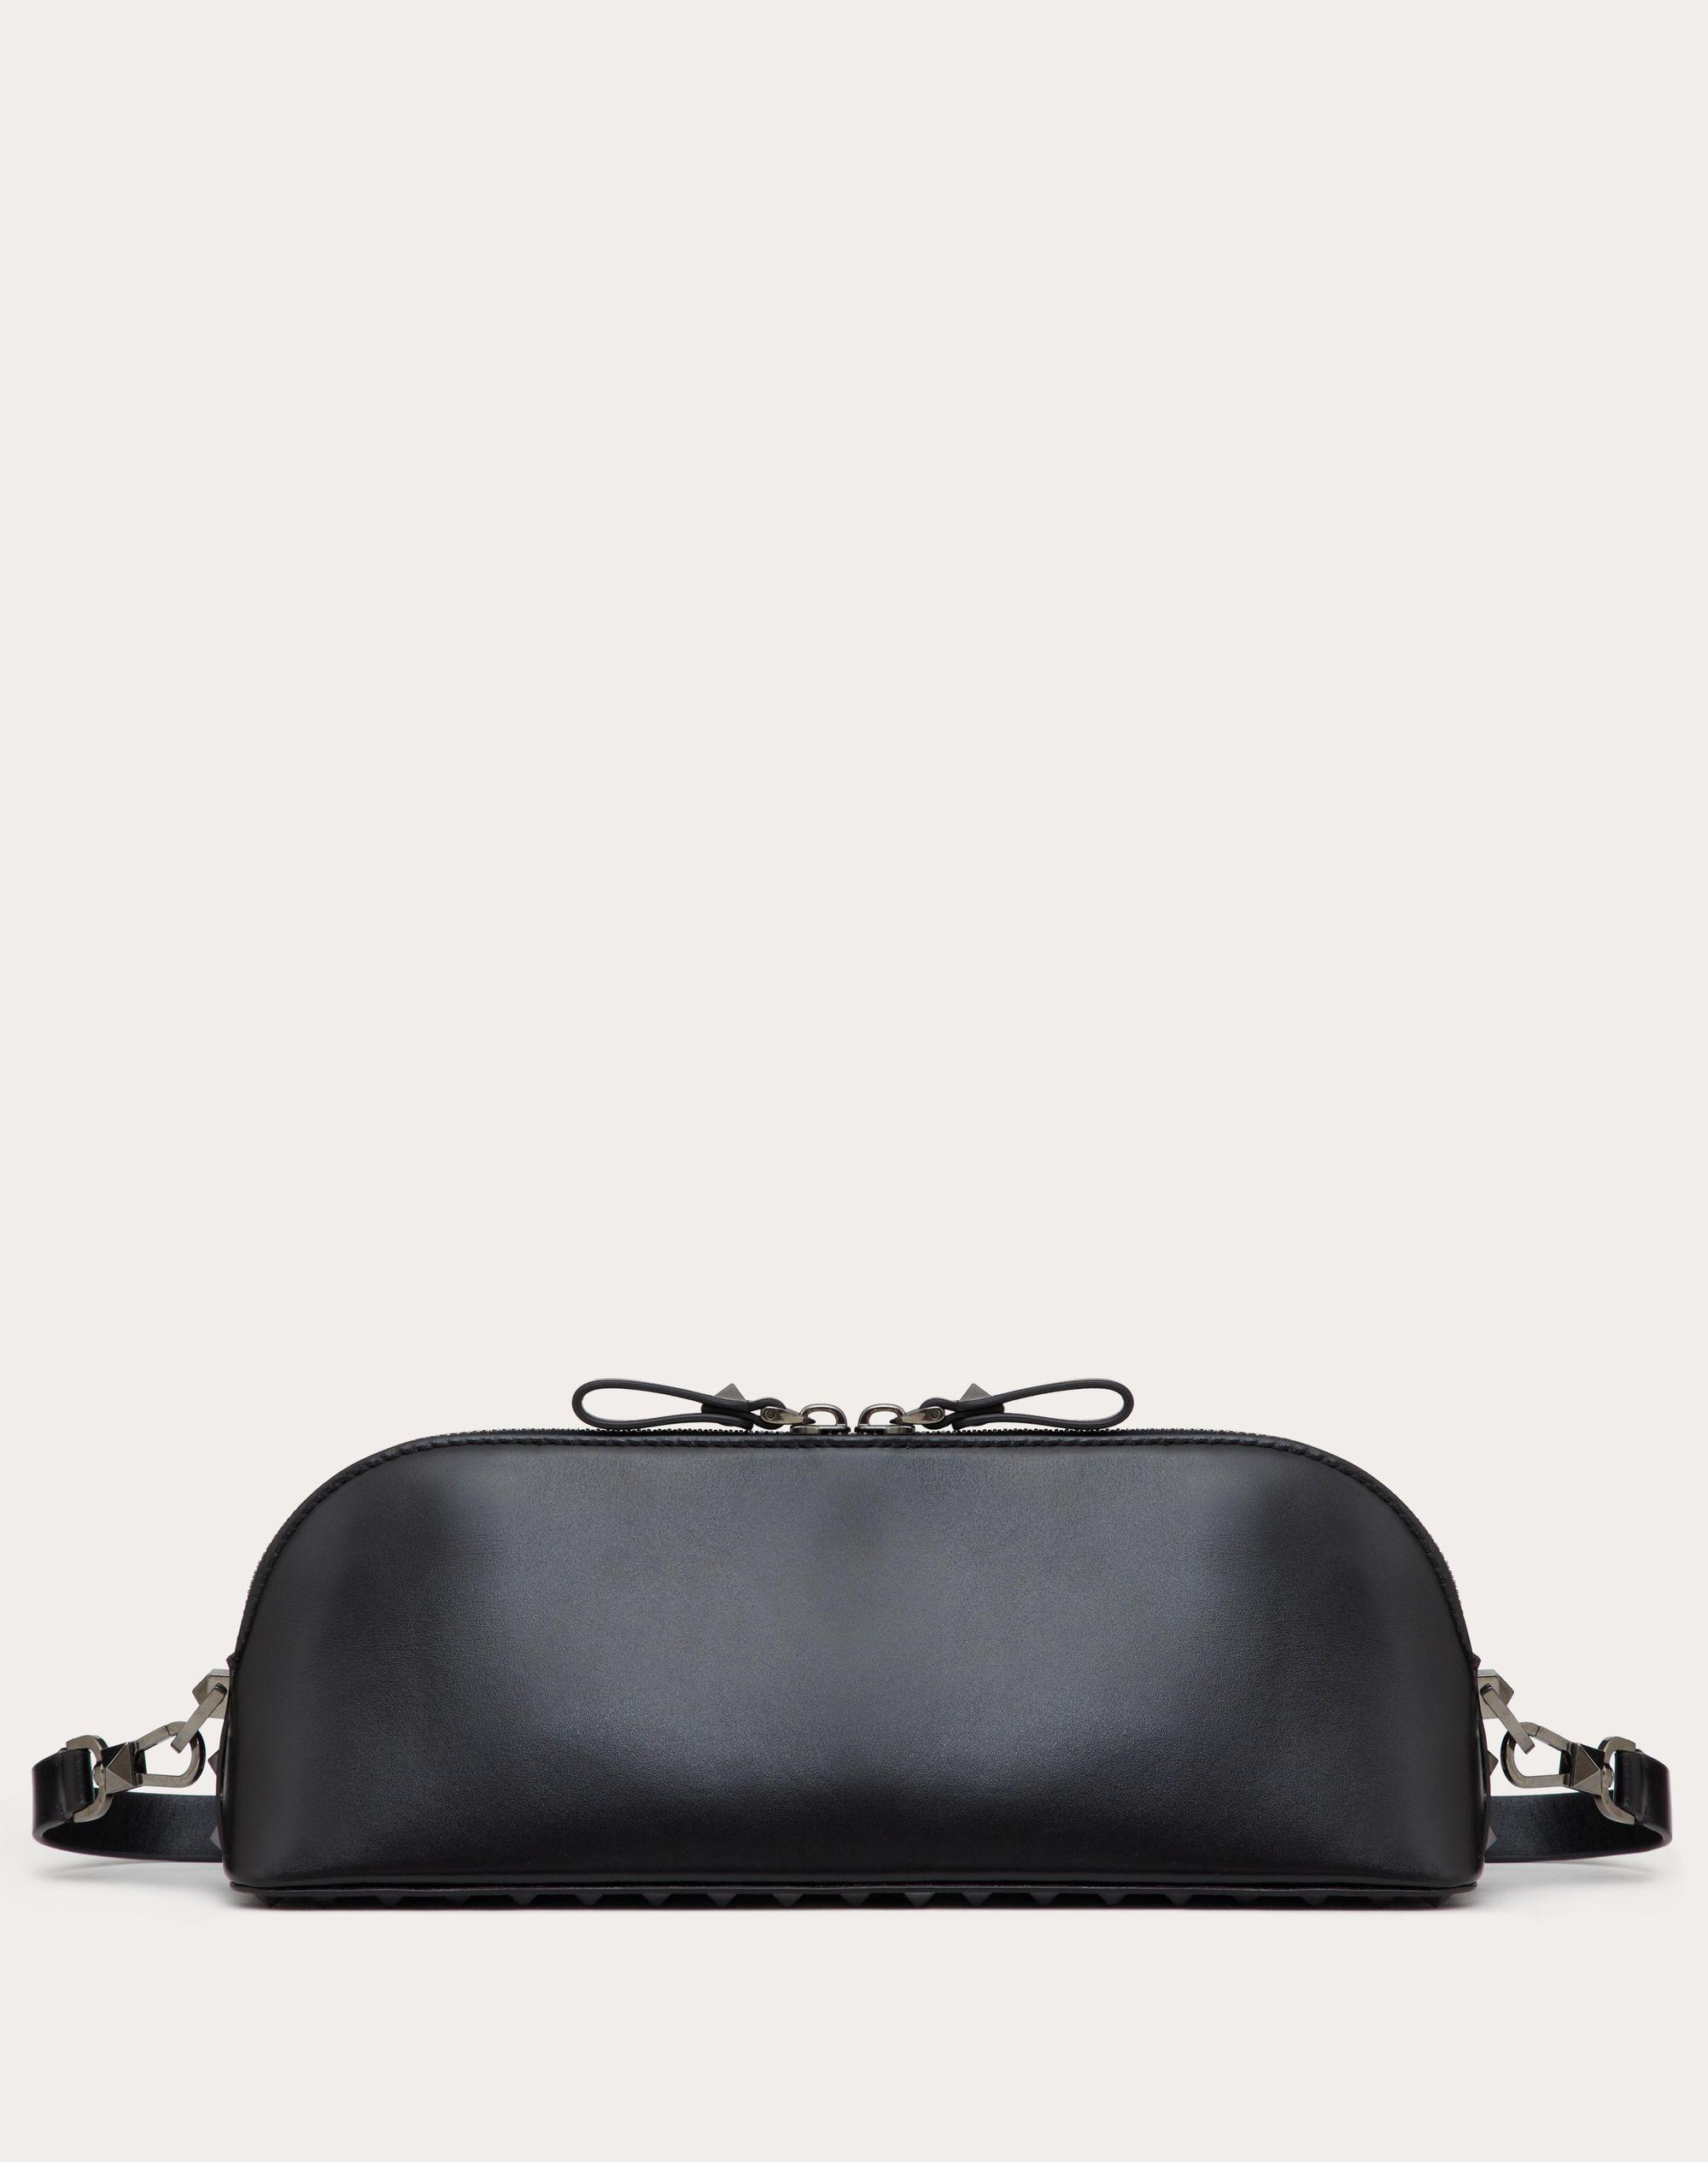 Rockstud leather clutch bag | Valentino Garavani